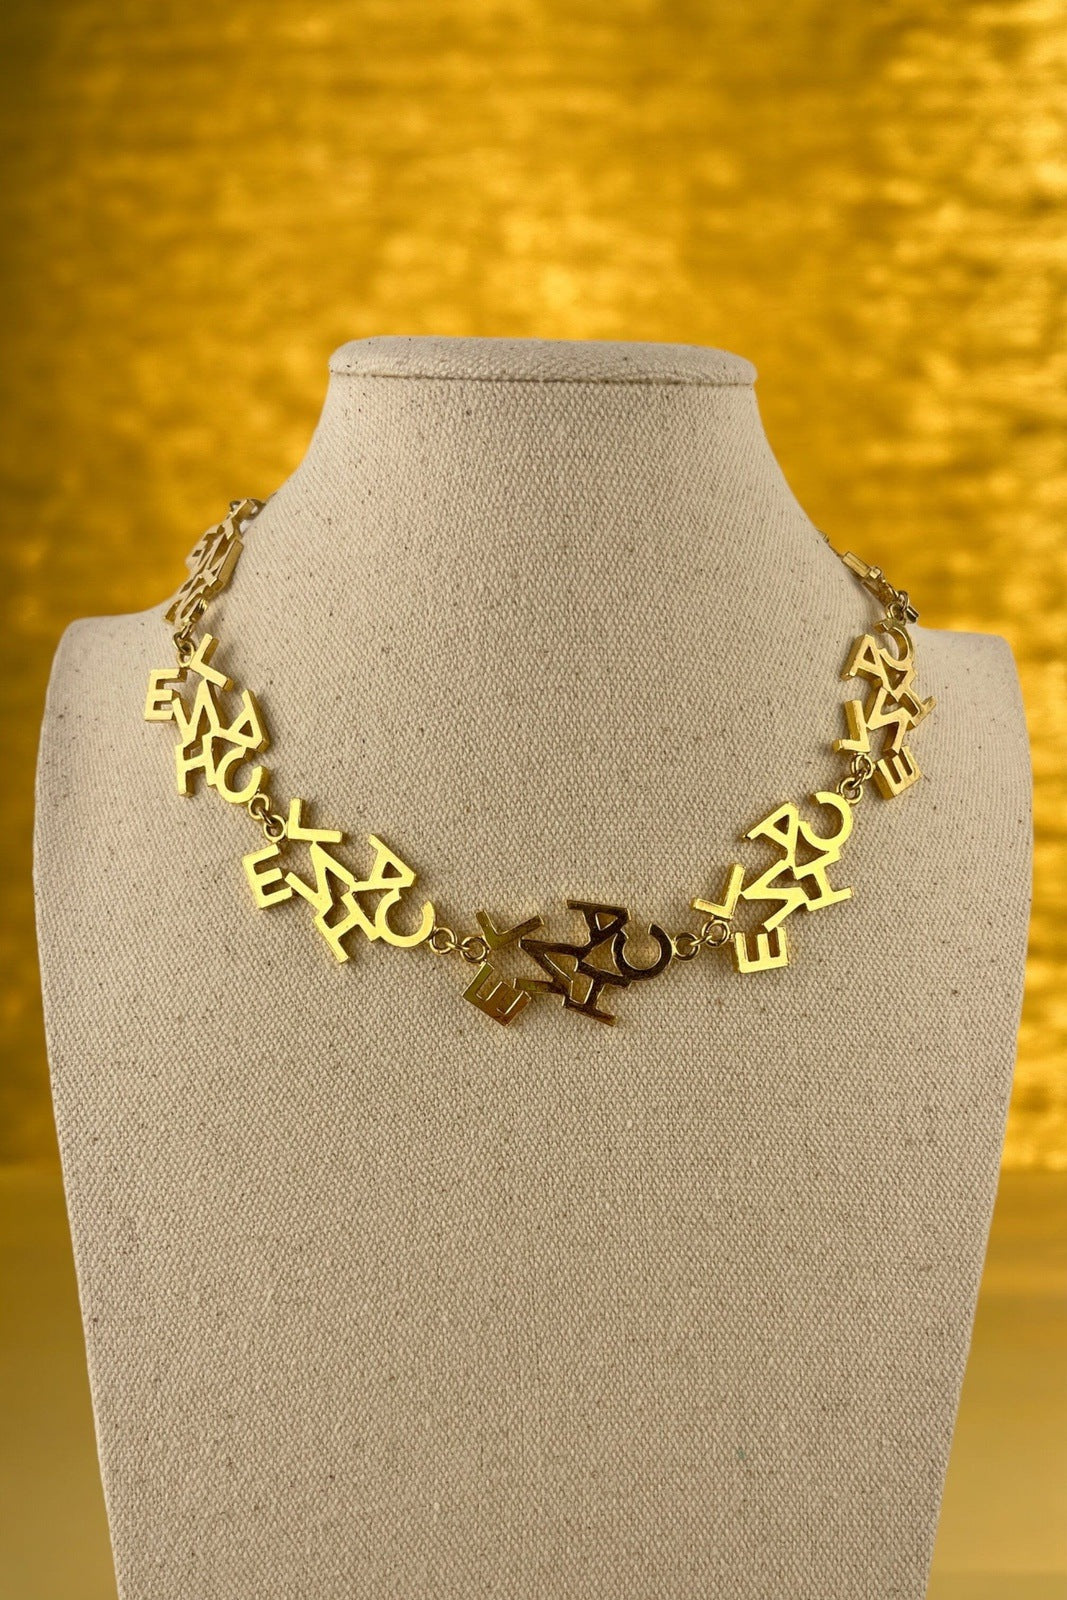 Auth Chanel Square Crystal CC logo Gold Necklace / Choker Runway -BNIB